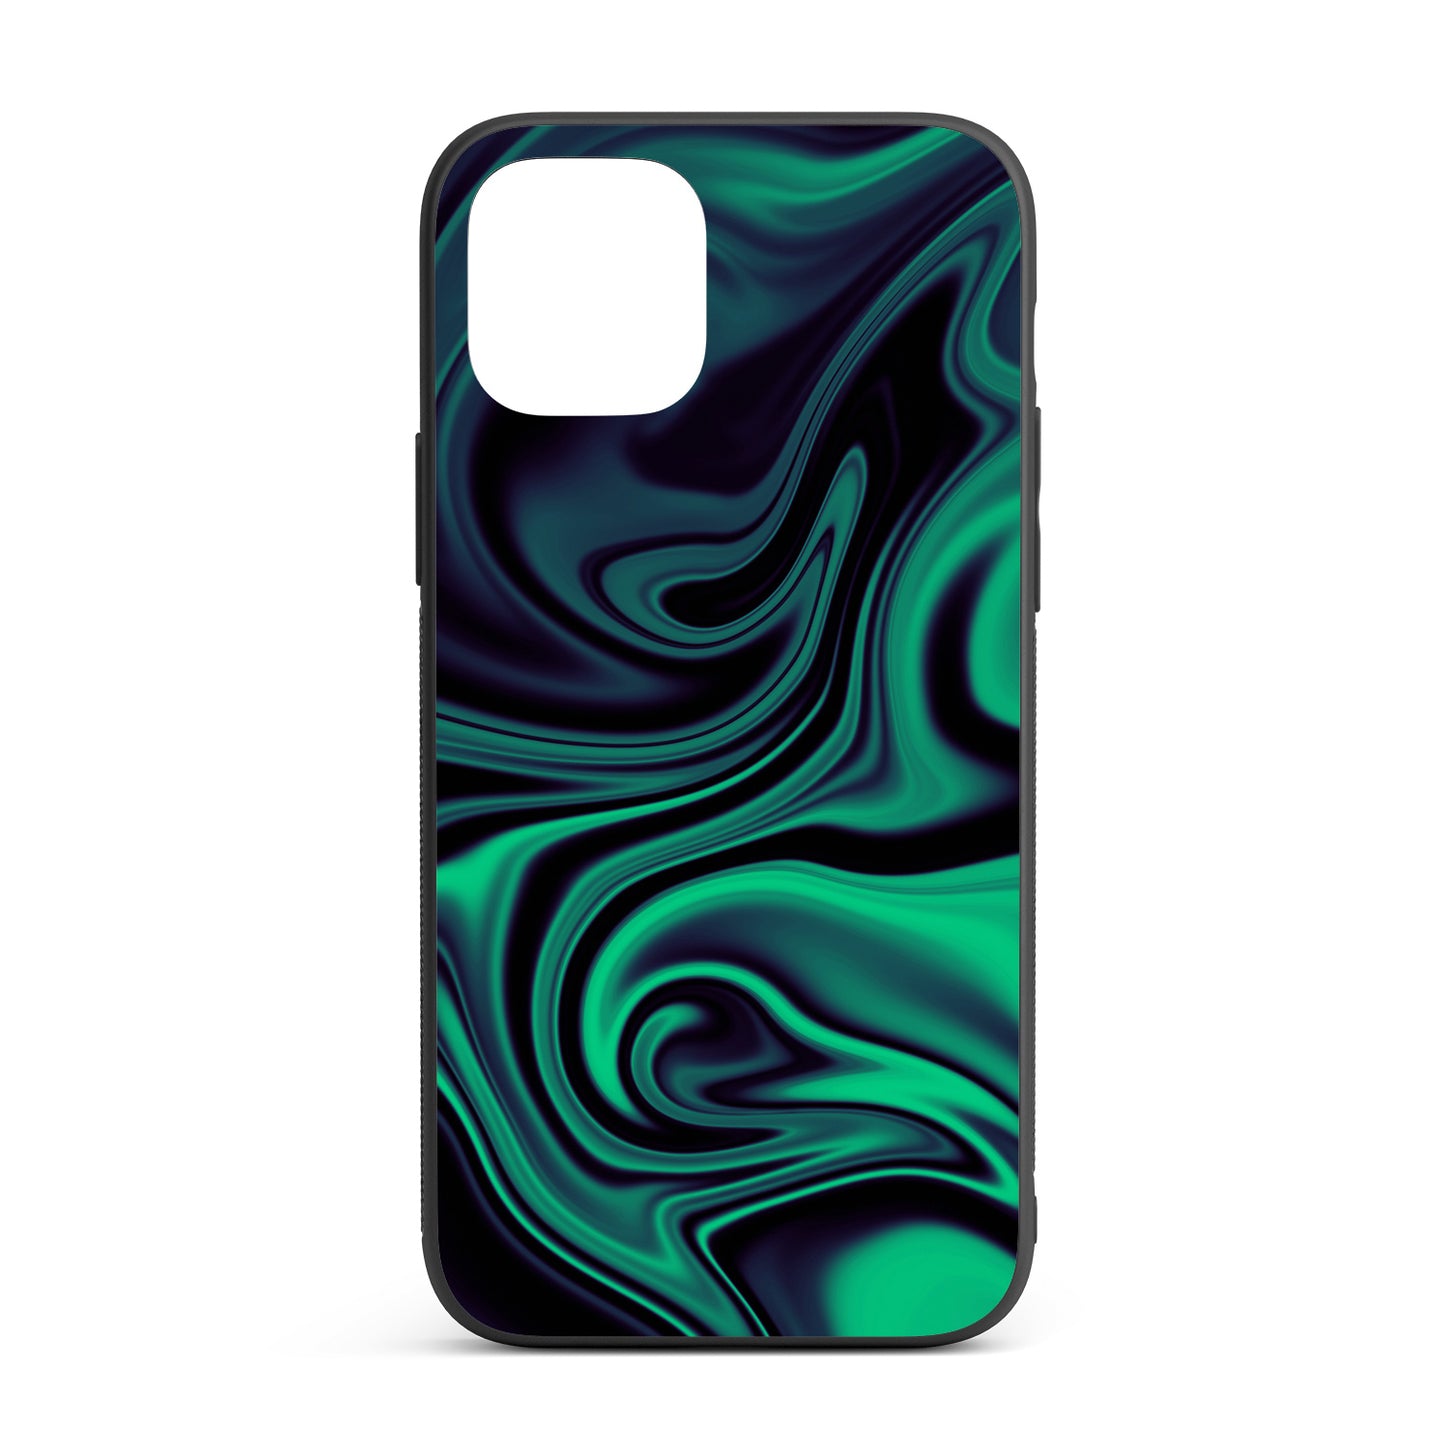 Misty Emerald iPhone glass case